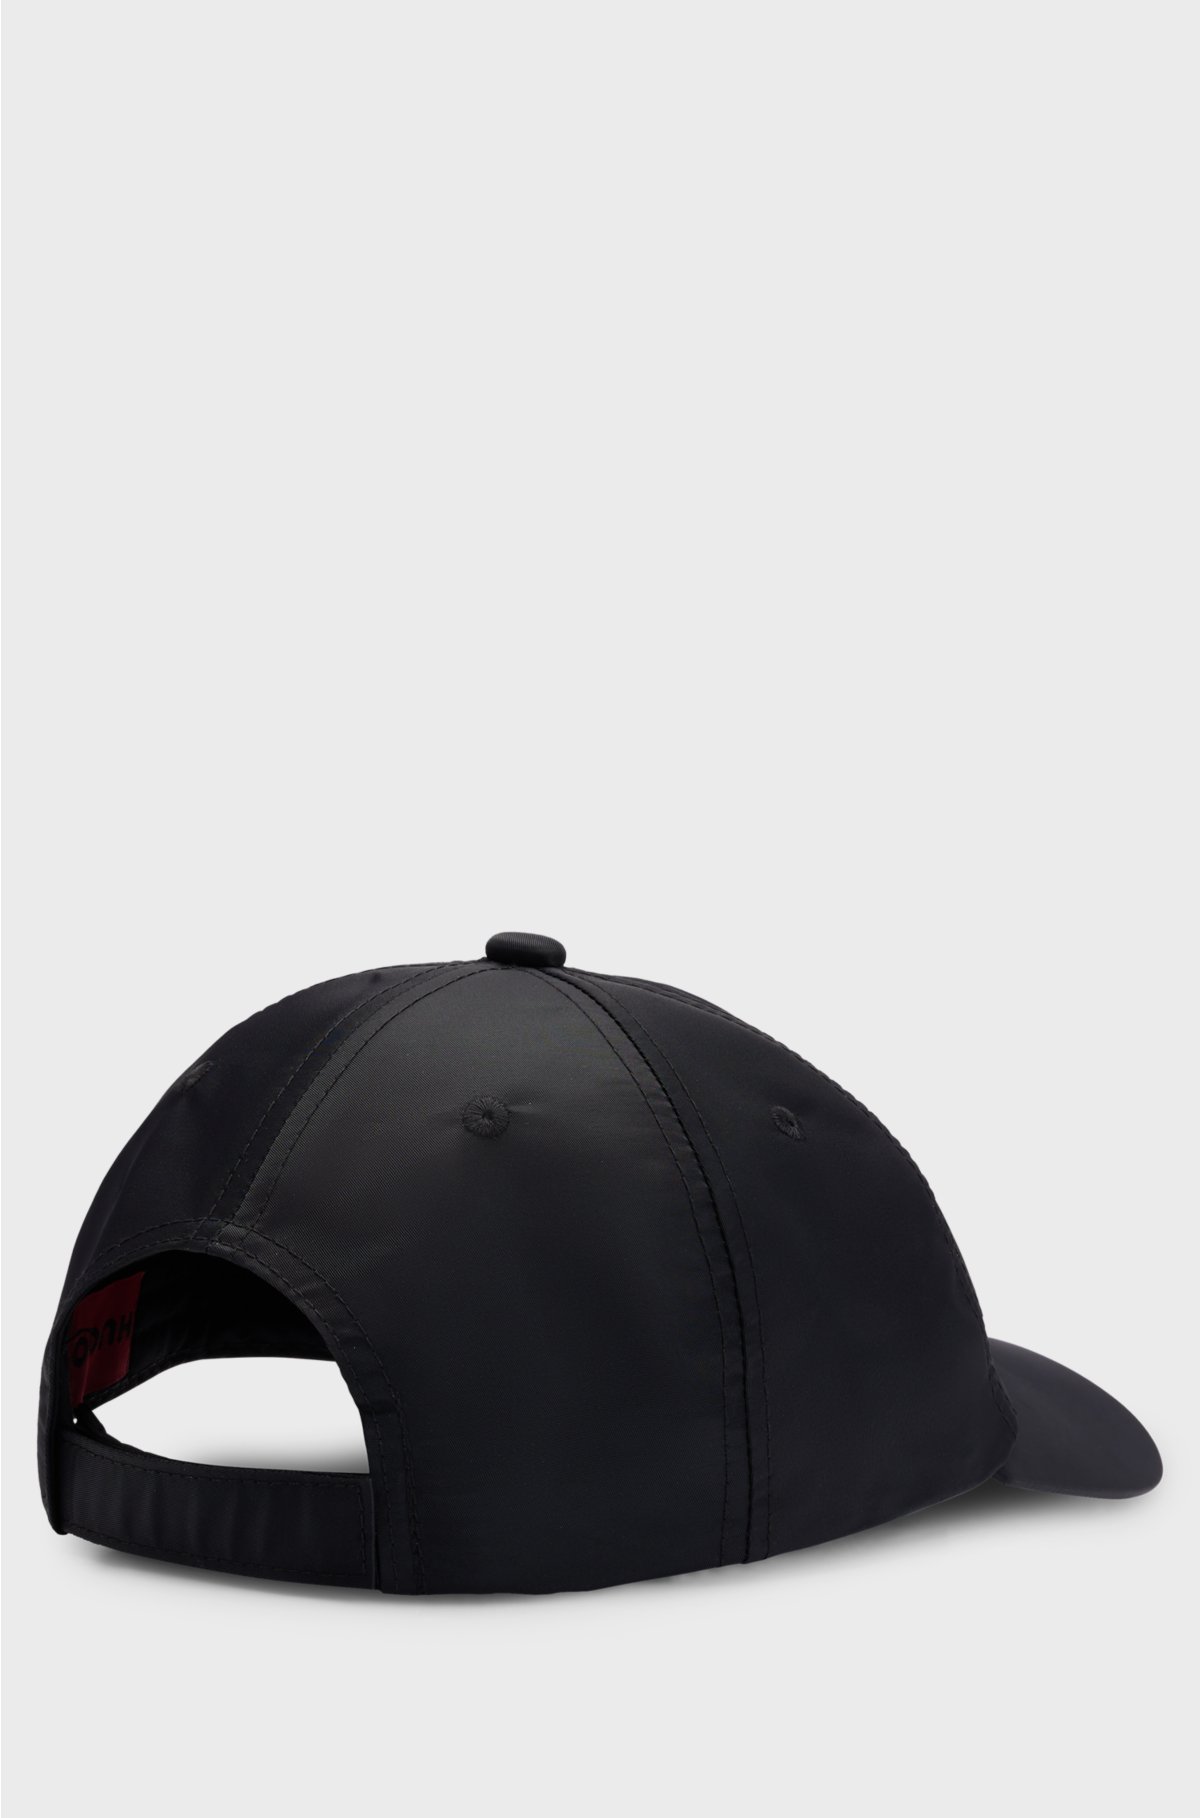 Waterproof cap with metallic stacked logo, Black